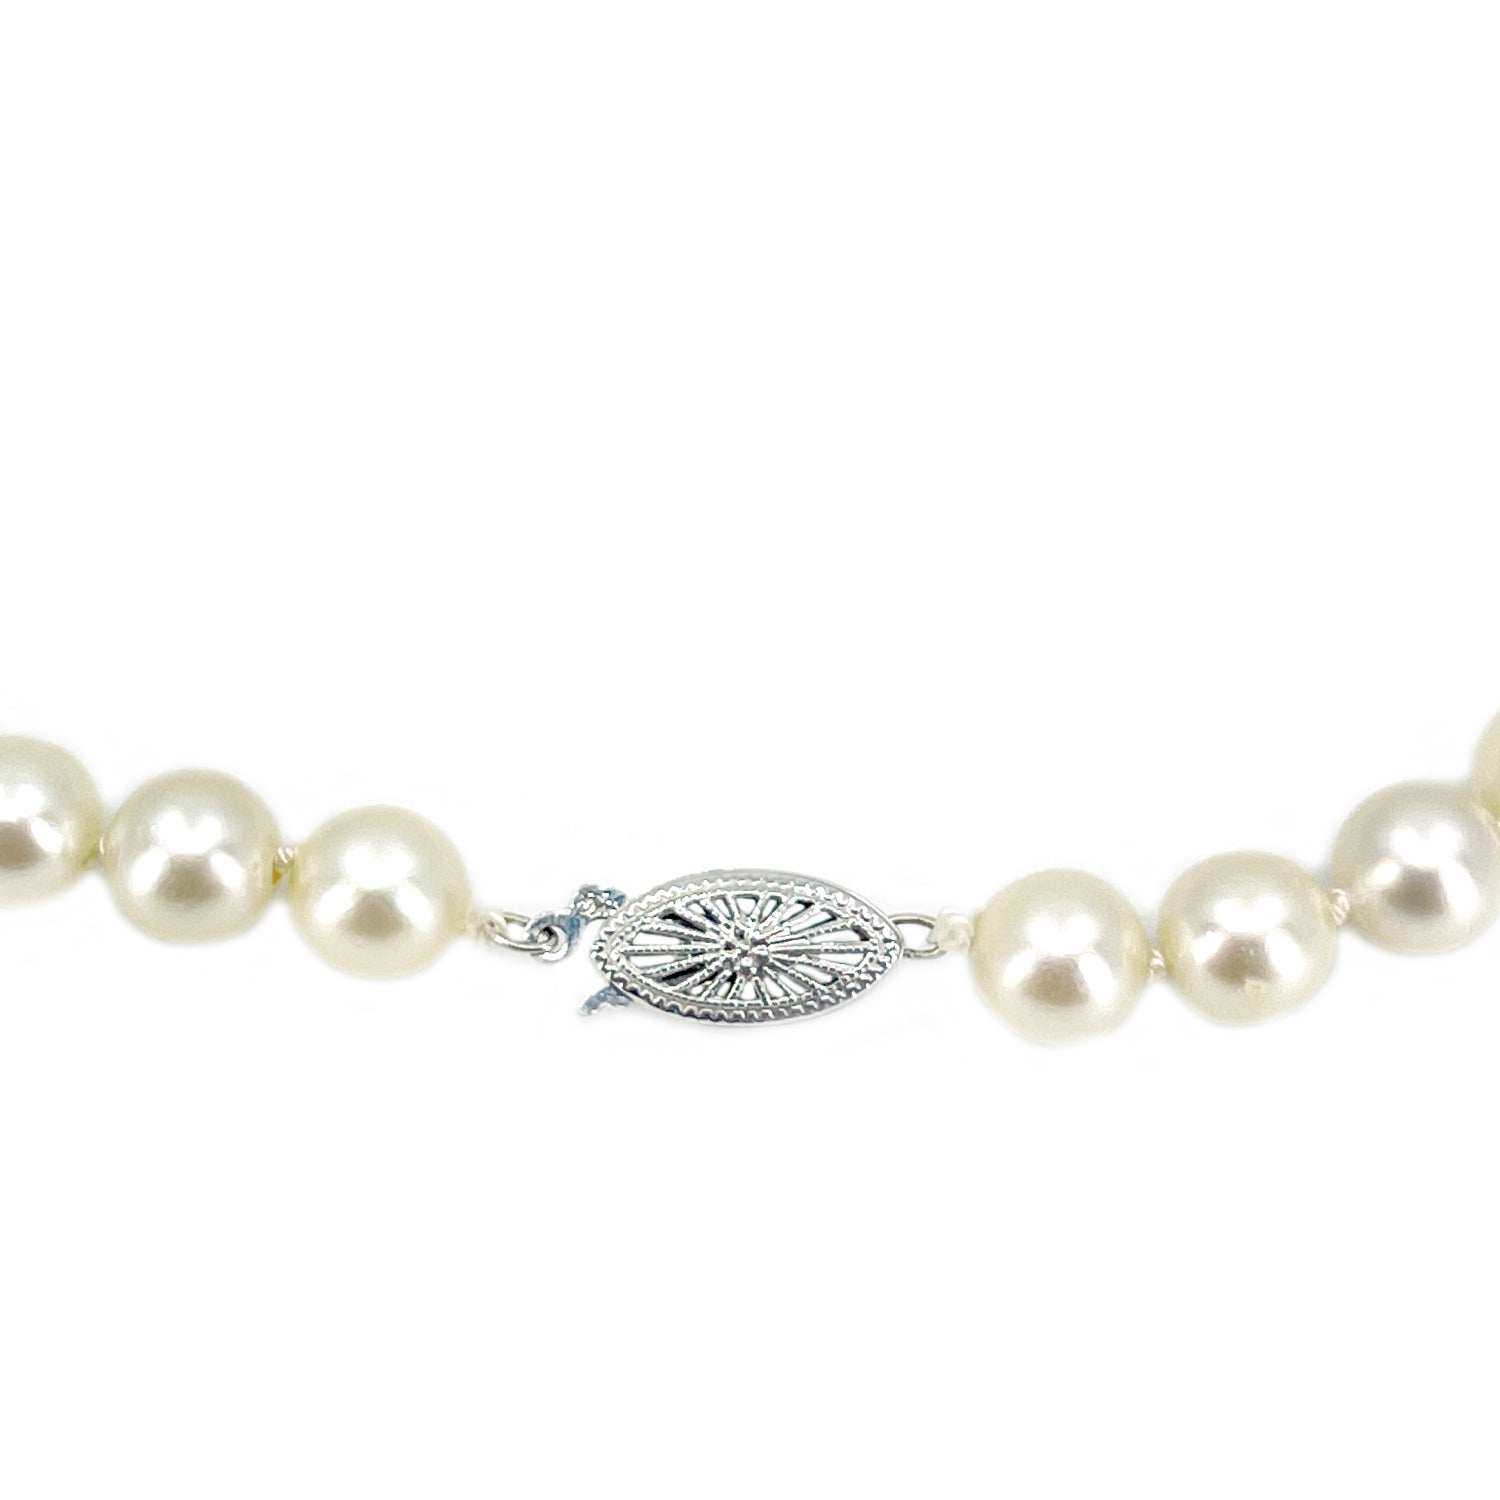 Starburst Filigree Mid-Century Cultured Akoya Pearl Vintage Necklace - 14K White Gold 23 Inch